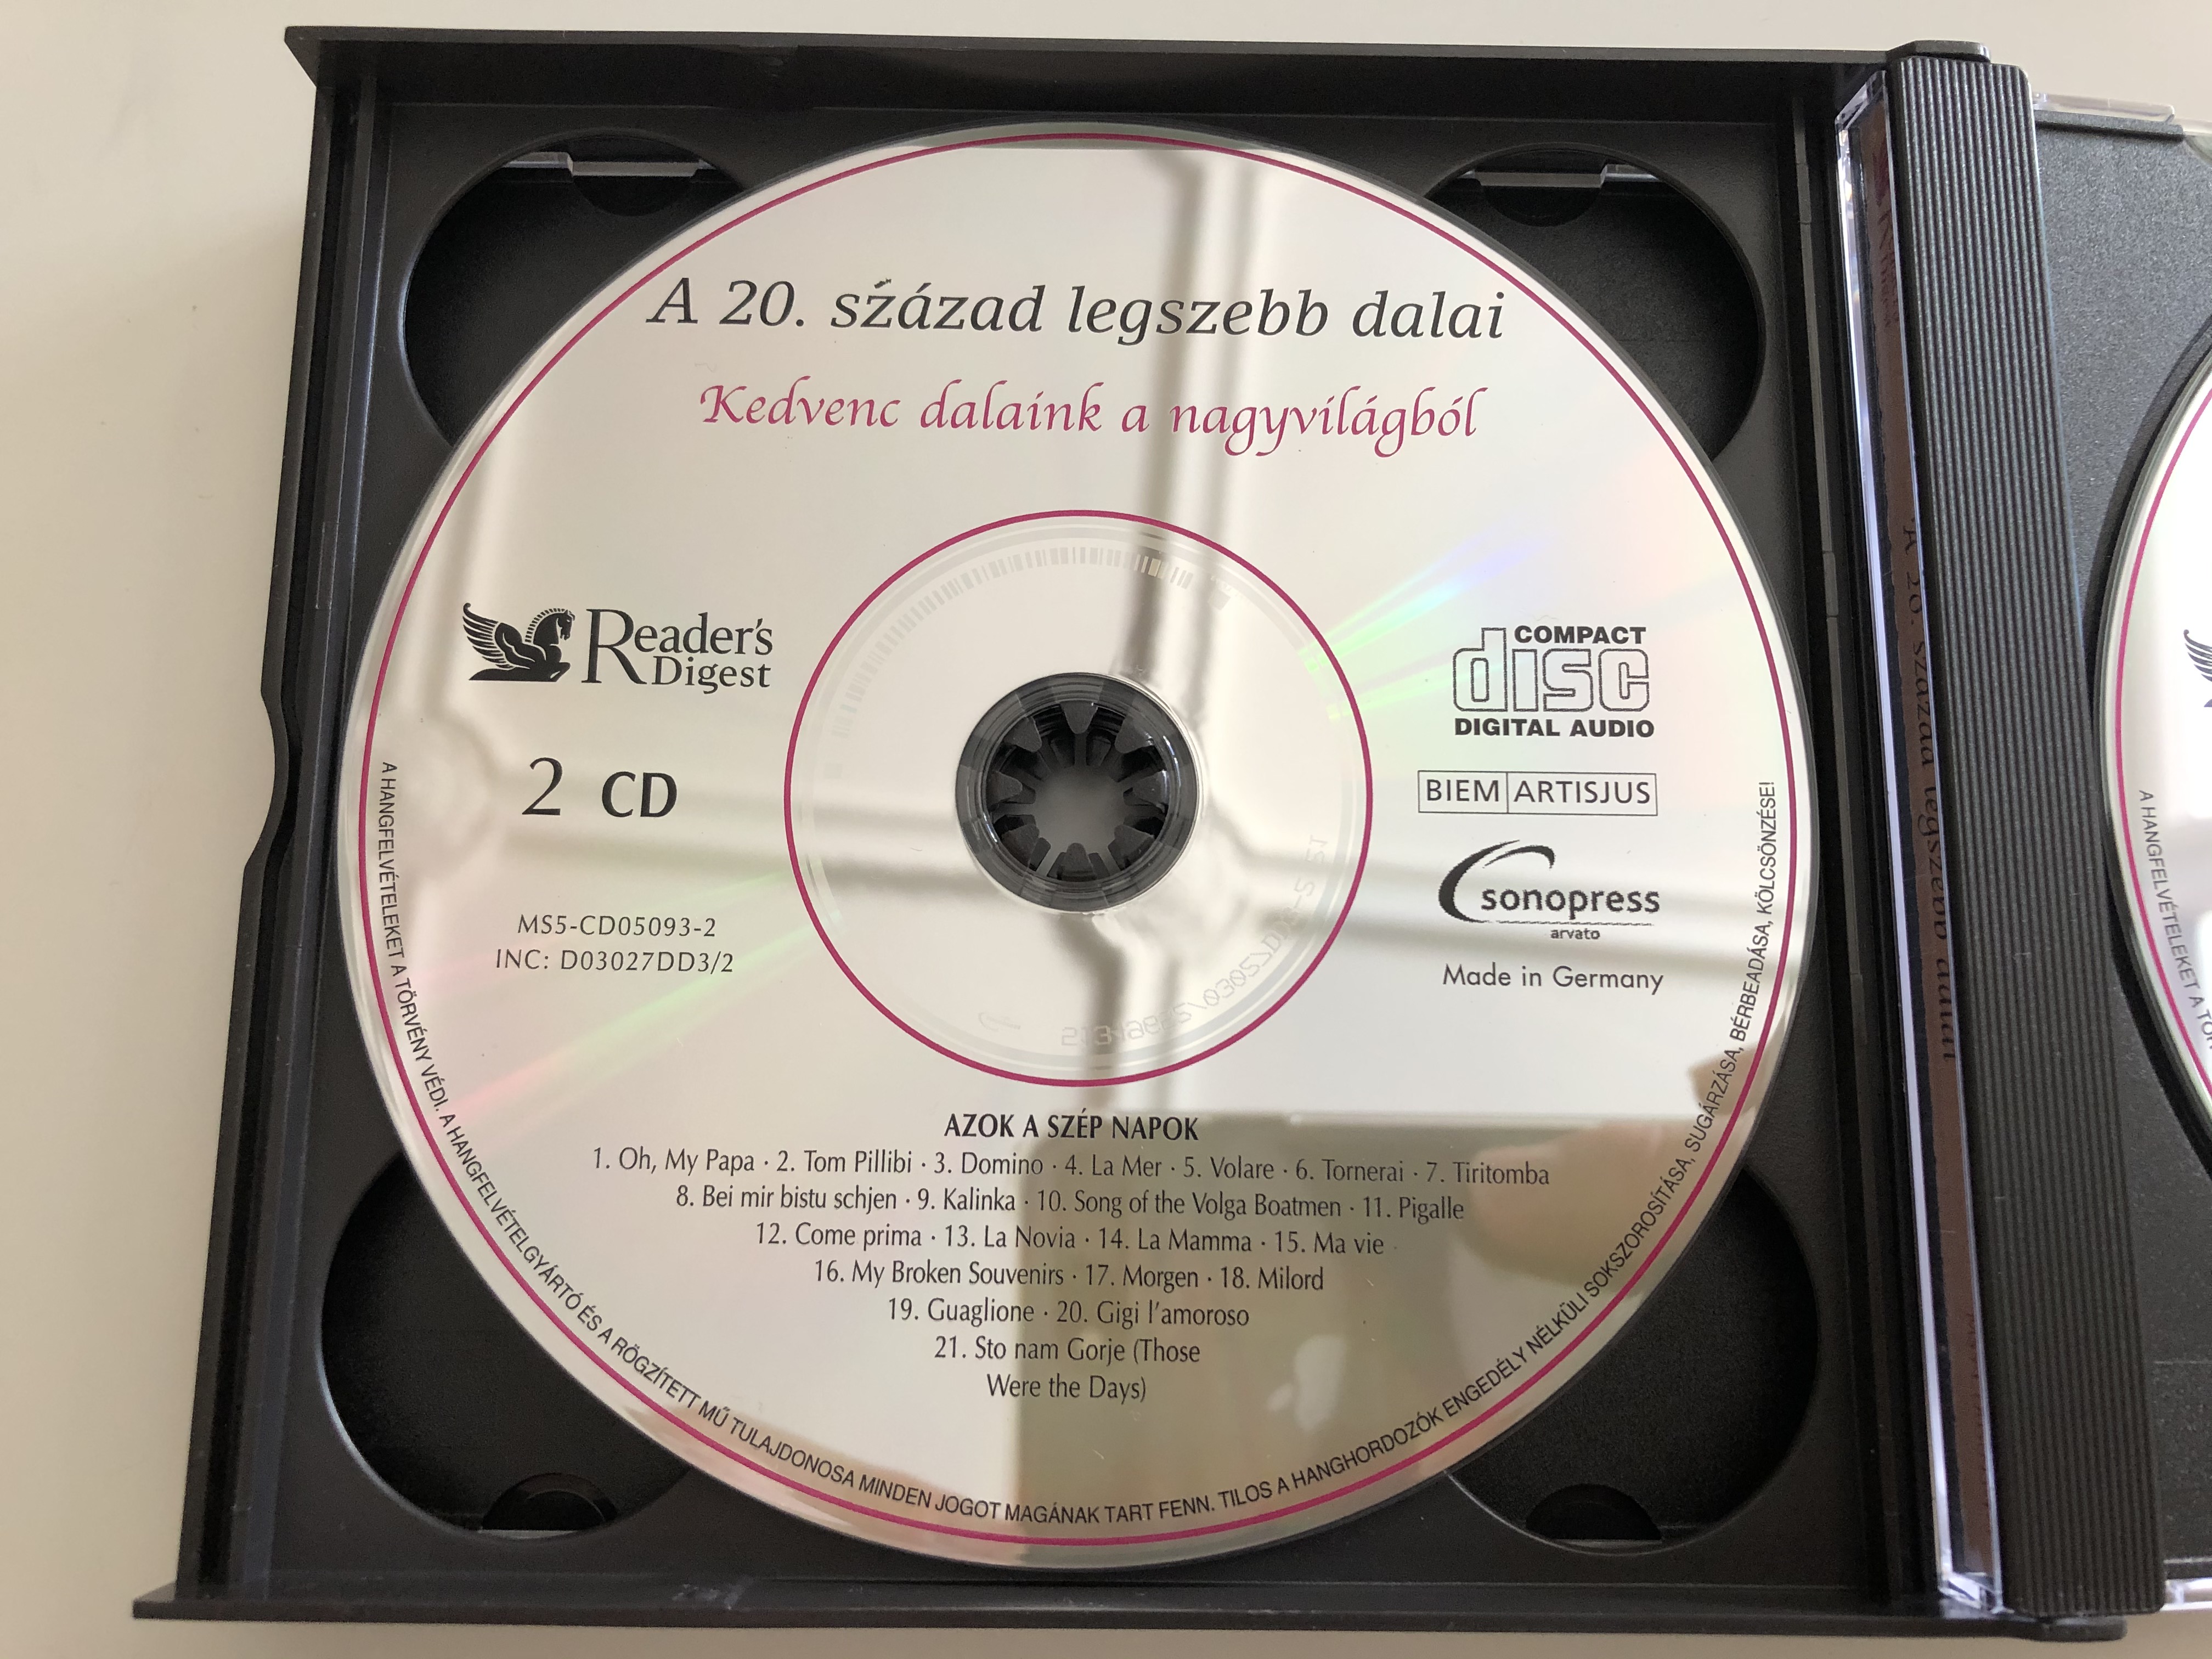 kedvenc-dalaink-a-nagyvil-gb-l-a-20.-sz-zad-legszebb-dalai-reader-s-digest-3x-audio-cd-2005-ms5-cd05093-b-3-.jpg